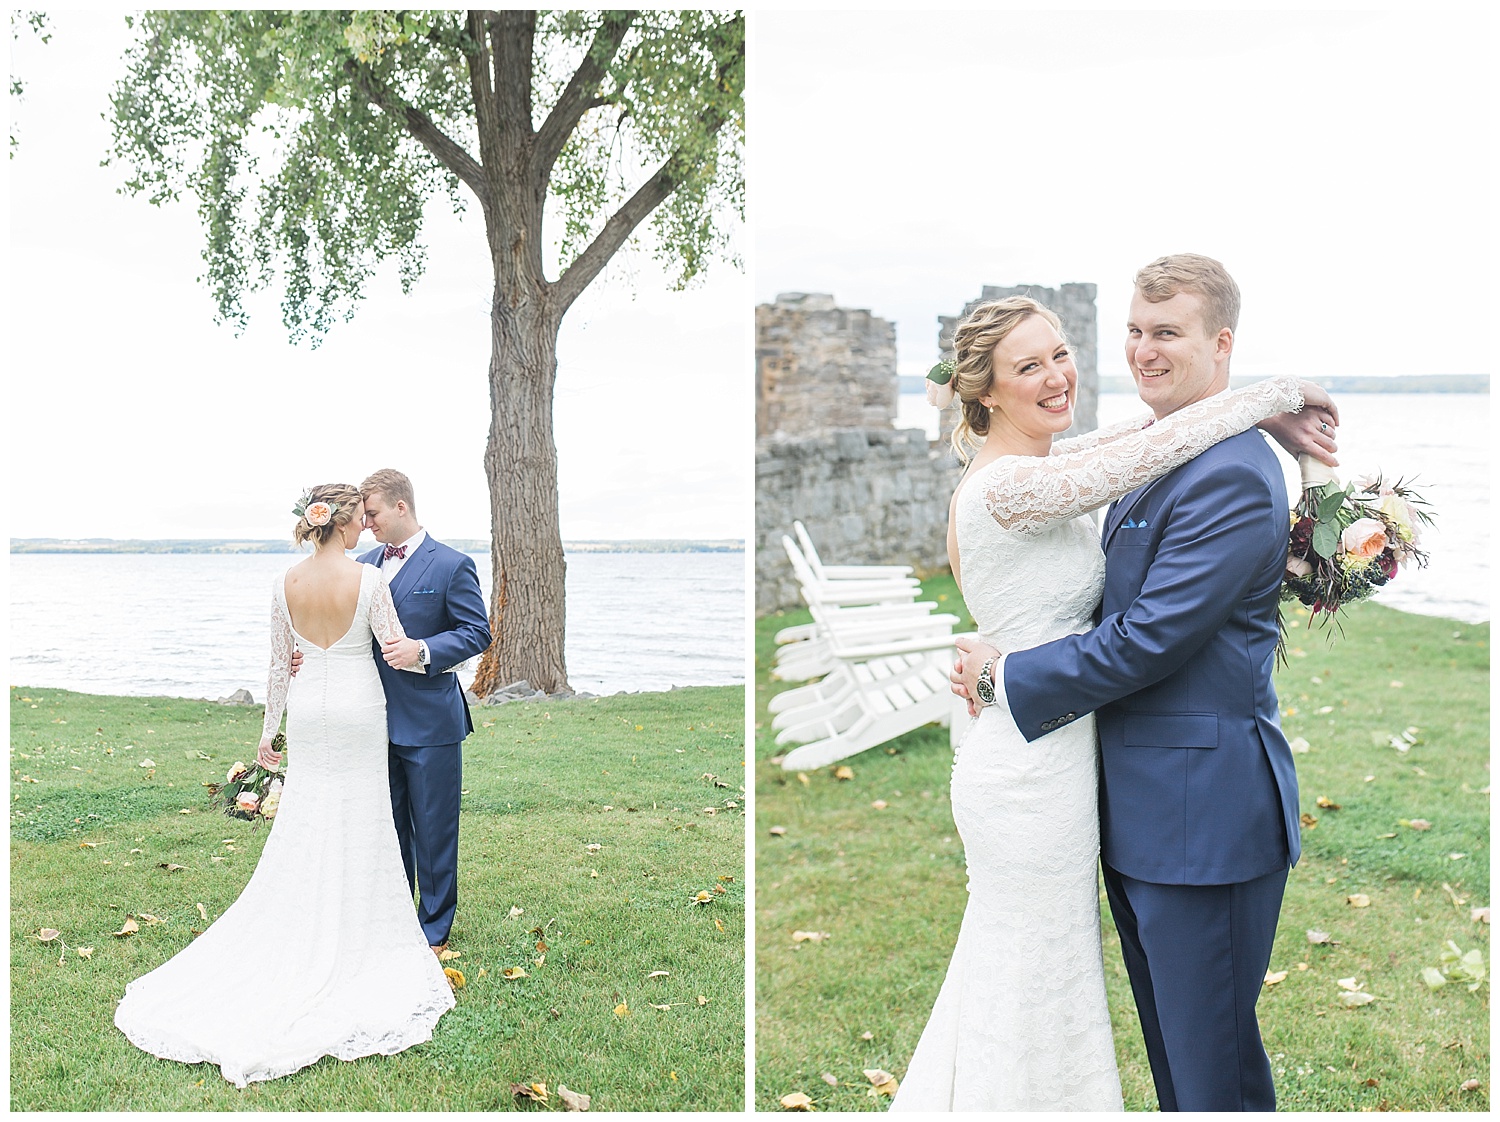 Margaret and Colin - Inns of Aurora - Lass and Beau-869_Buffalo wedding photography.jpg